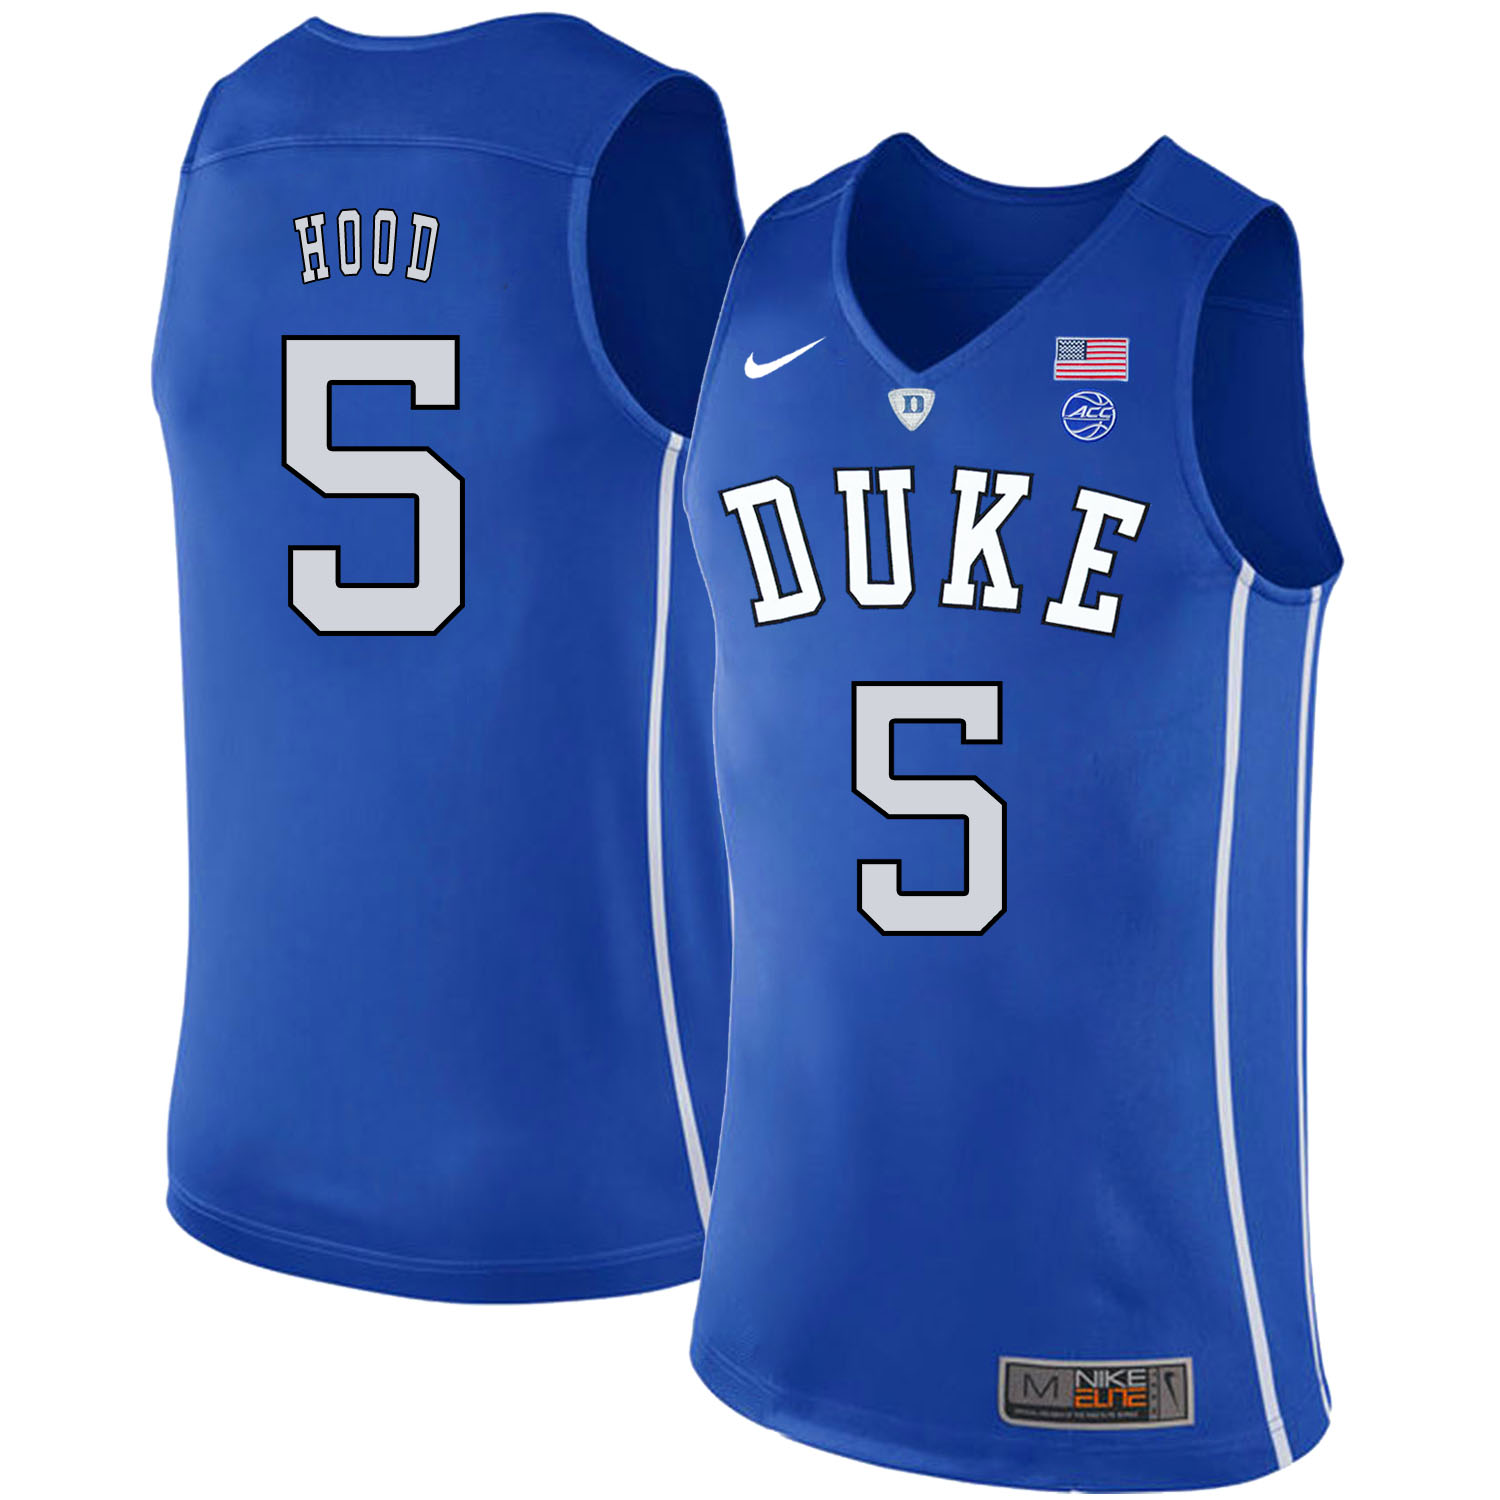 Duke Blue Devils 5 Rodney Hood Blue Nike College Basketball Jersey